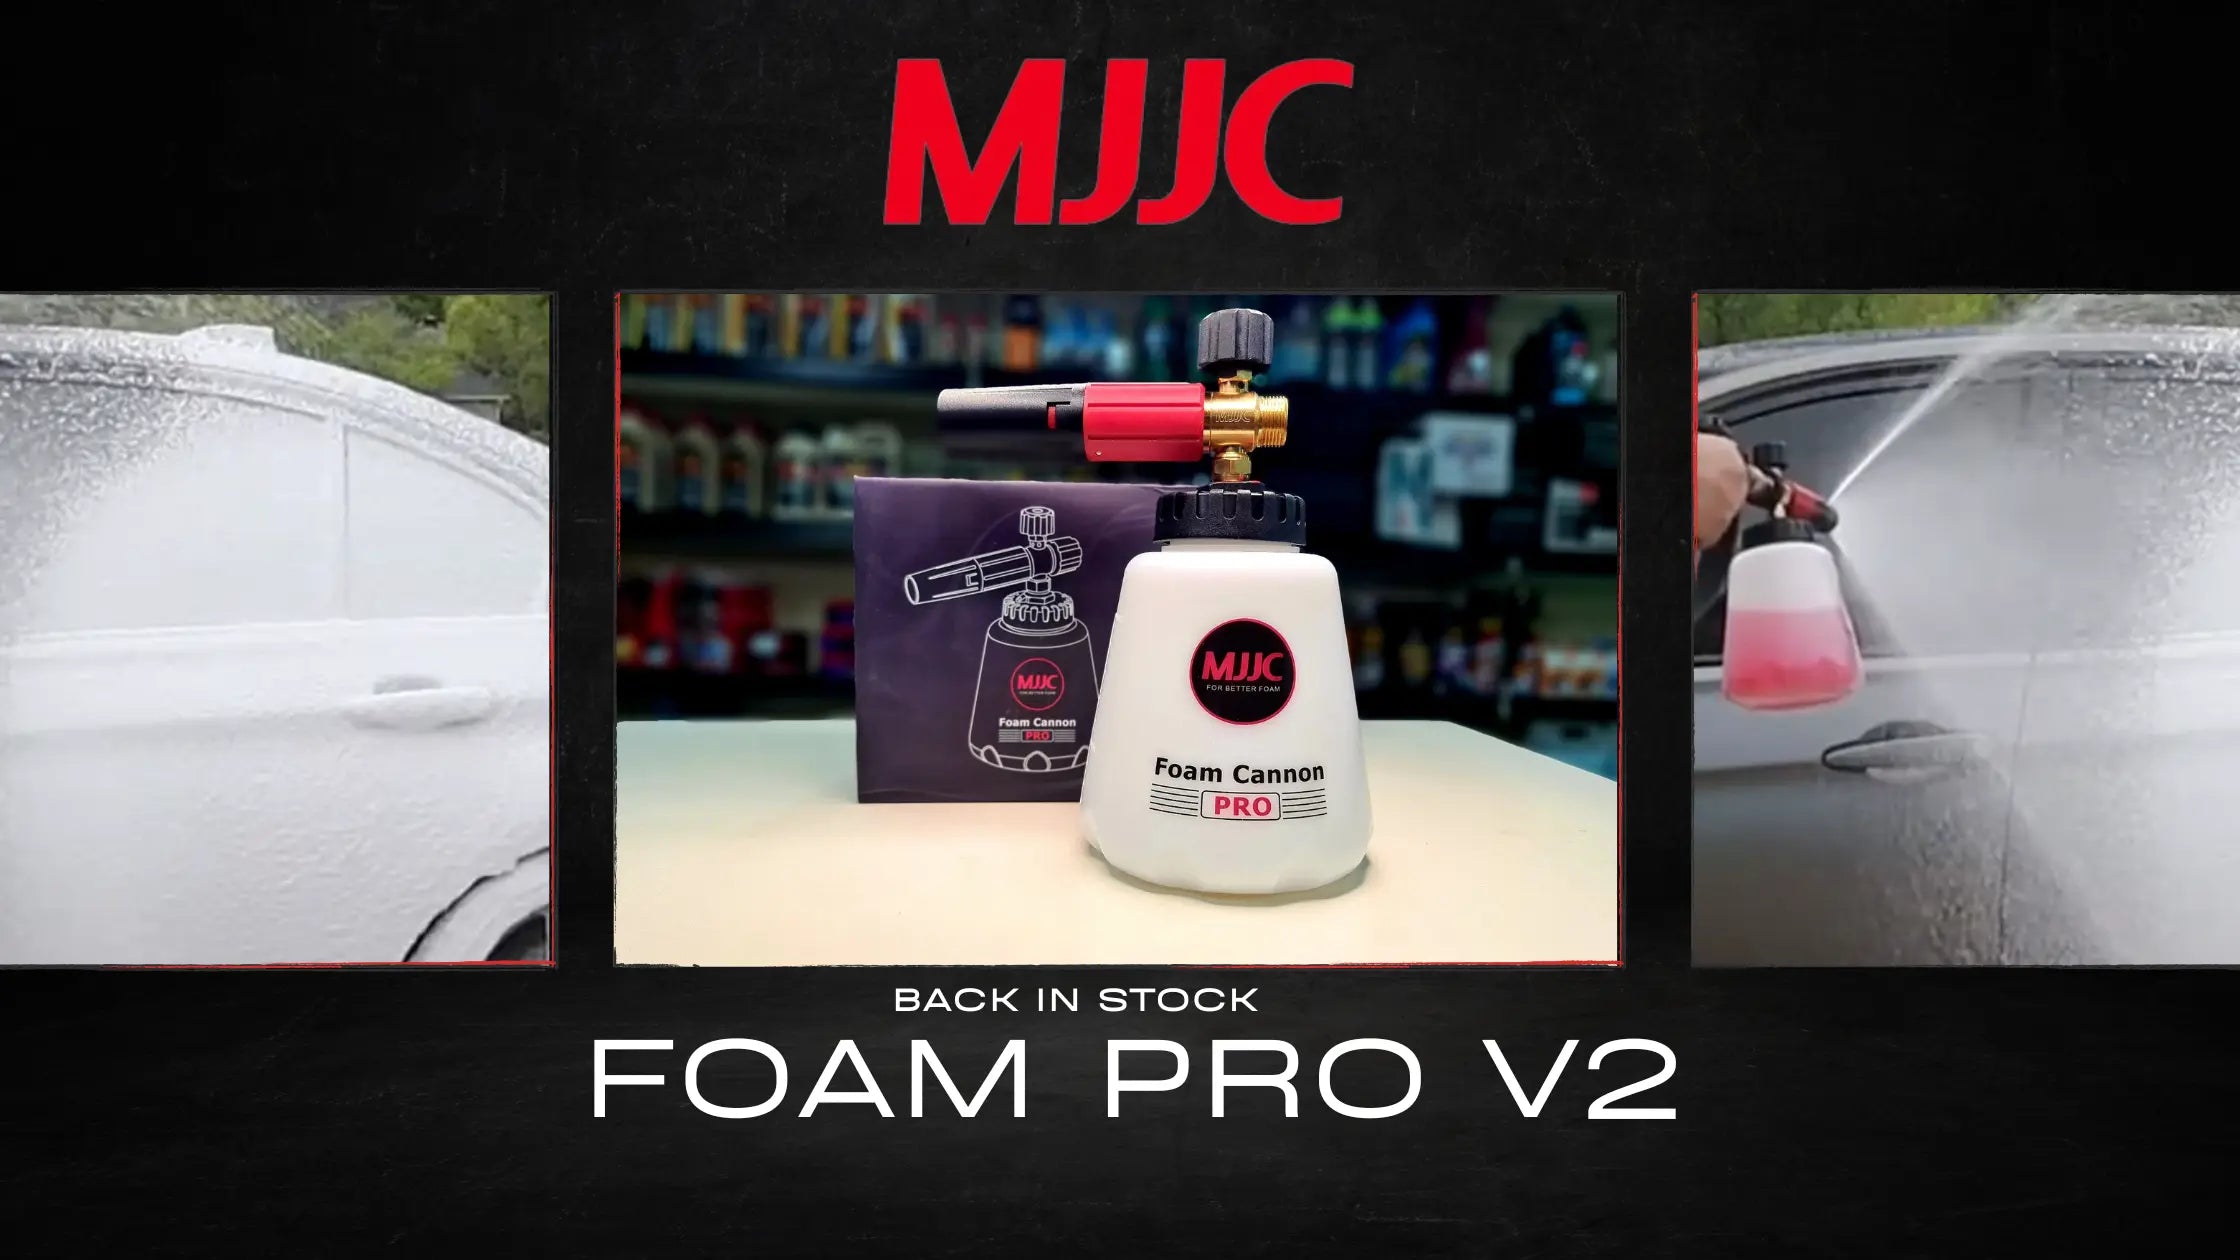 MJJC Foam Cannon Pro V2 Back in Stock